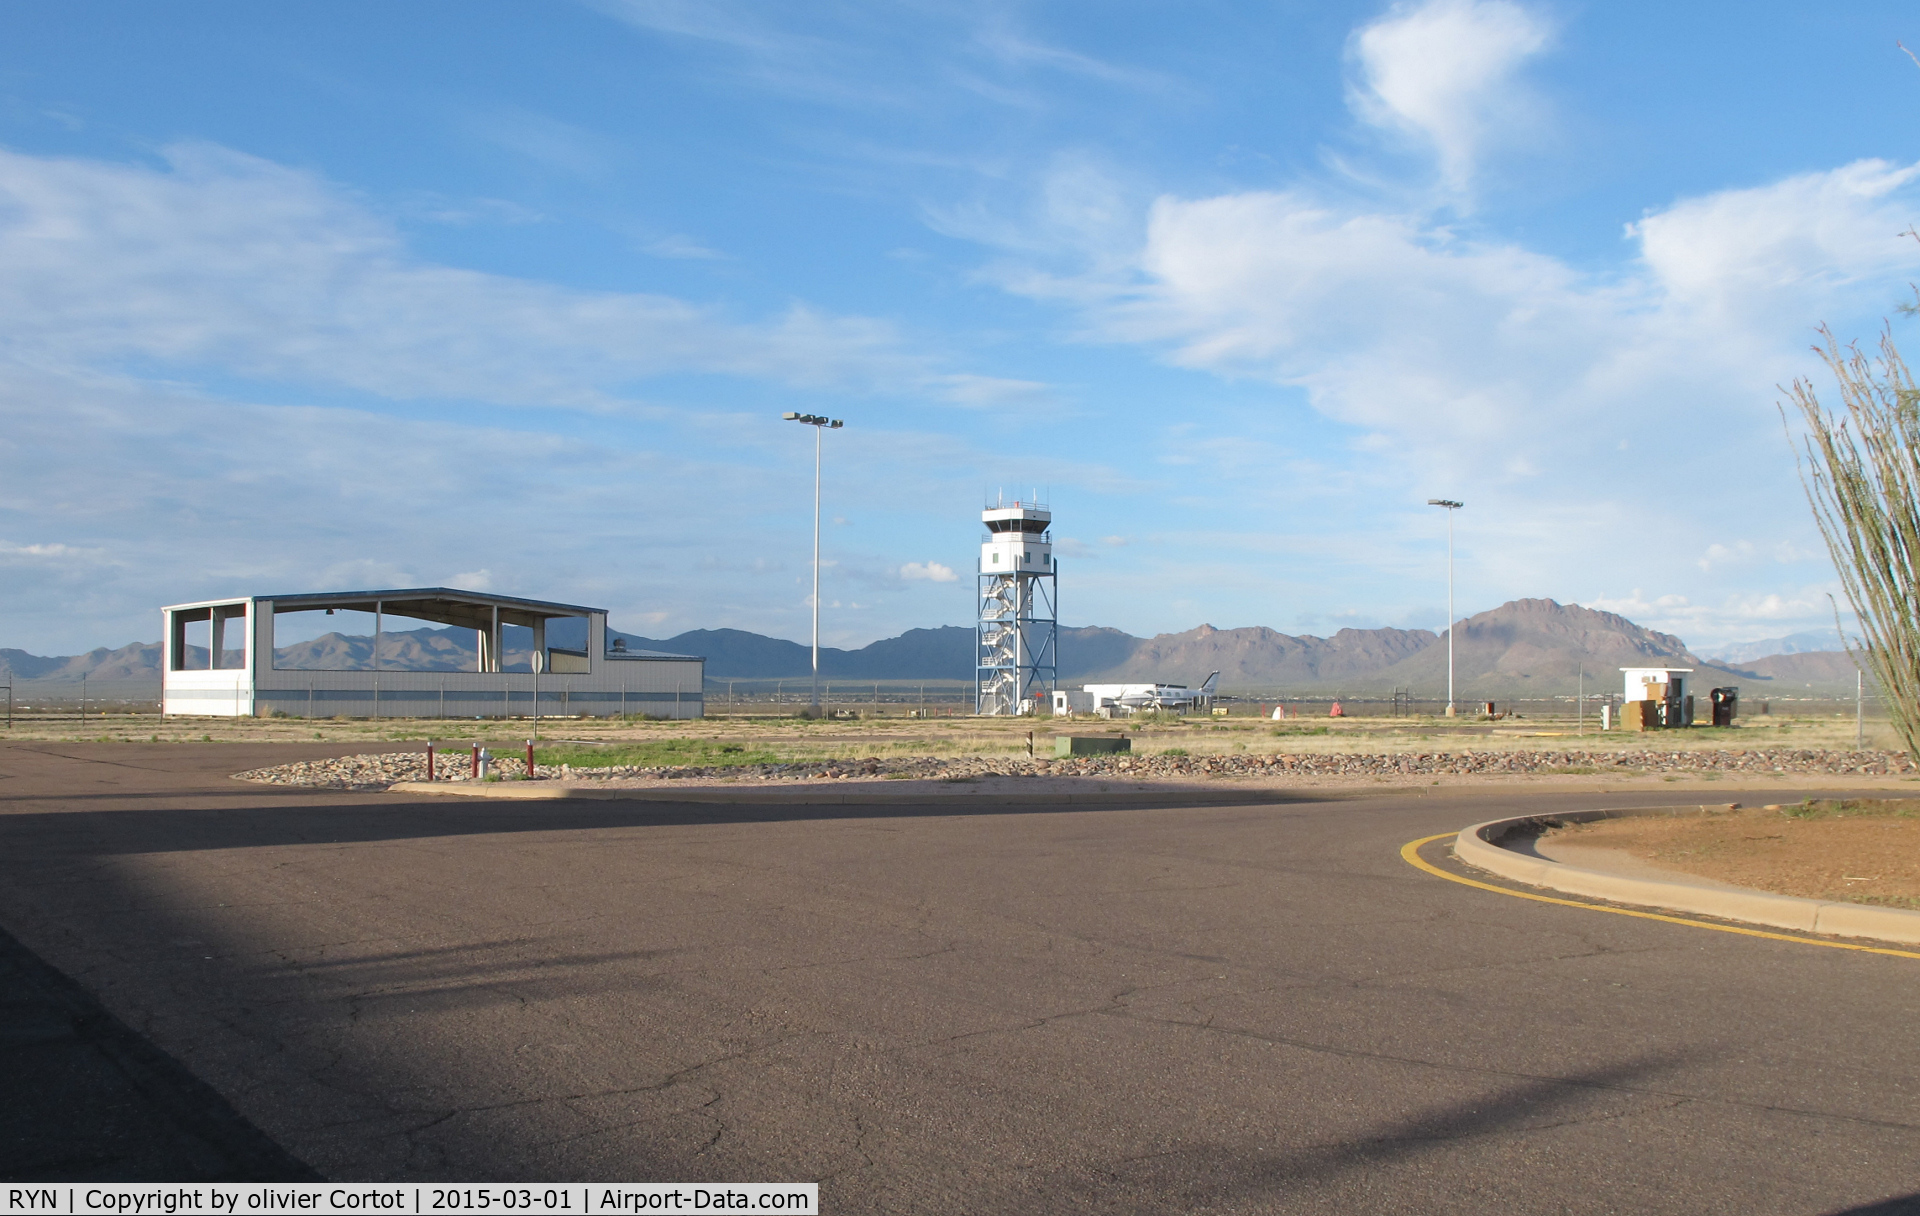 Ryan Field Airport (RYN) - the tower